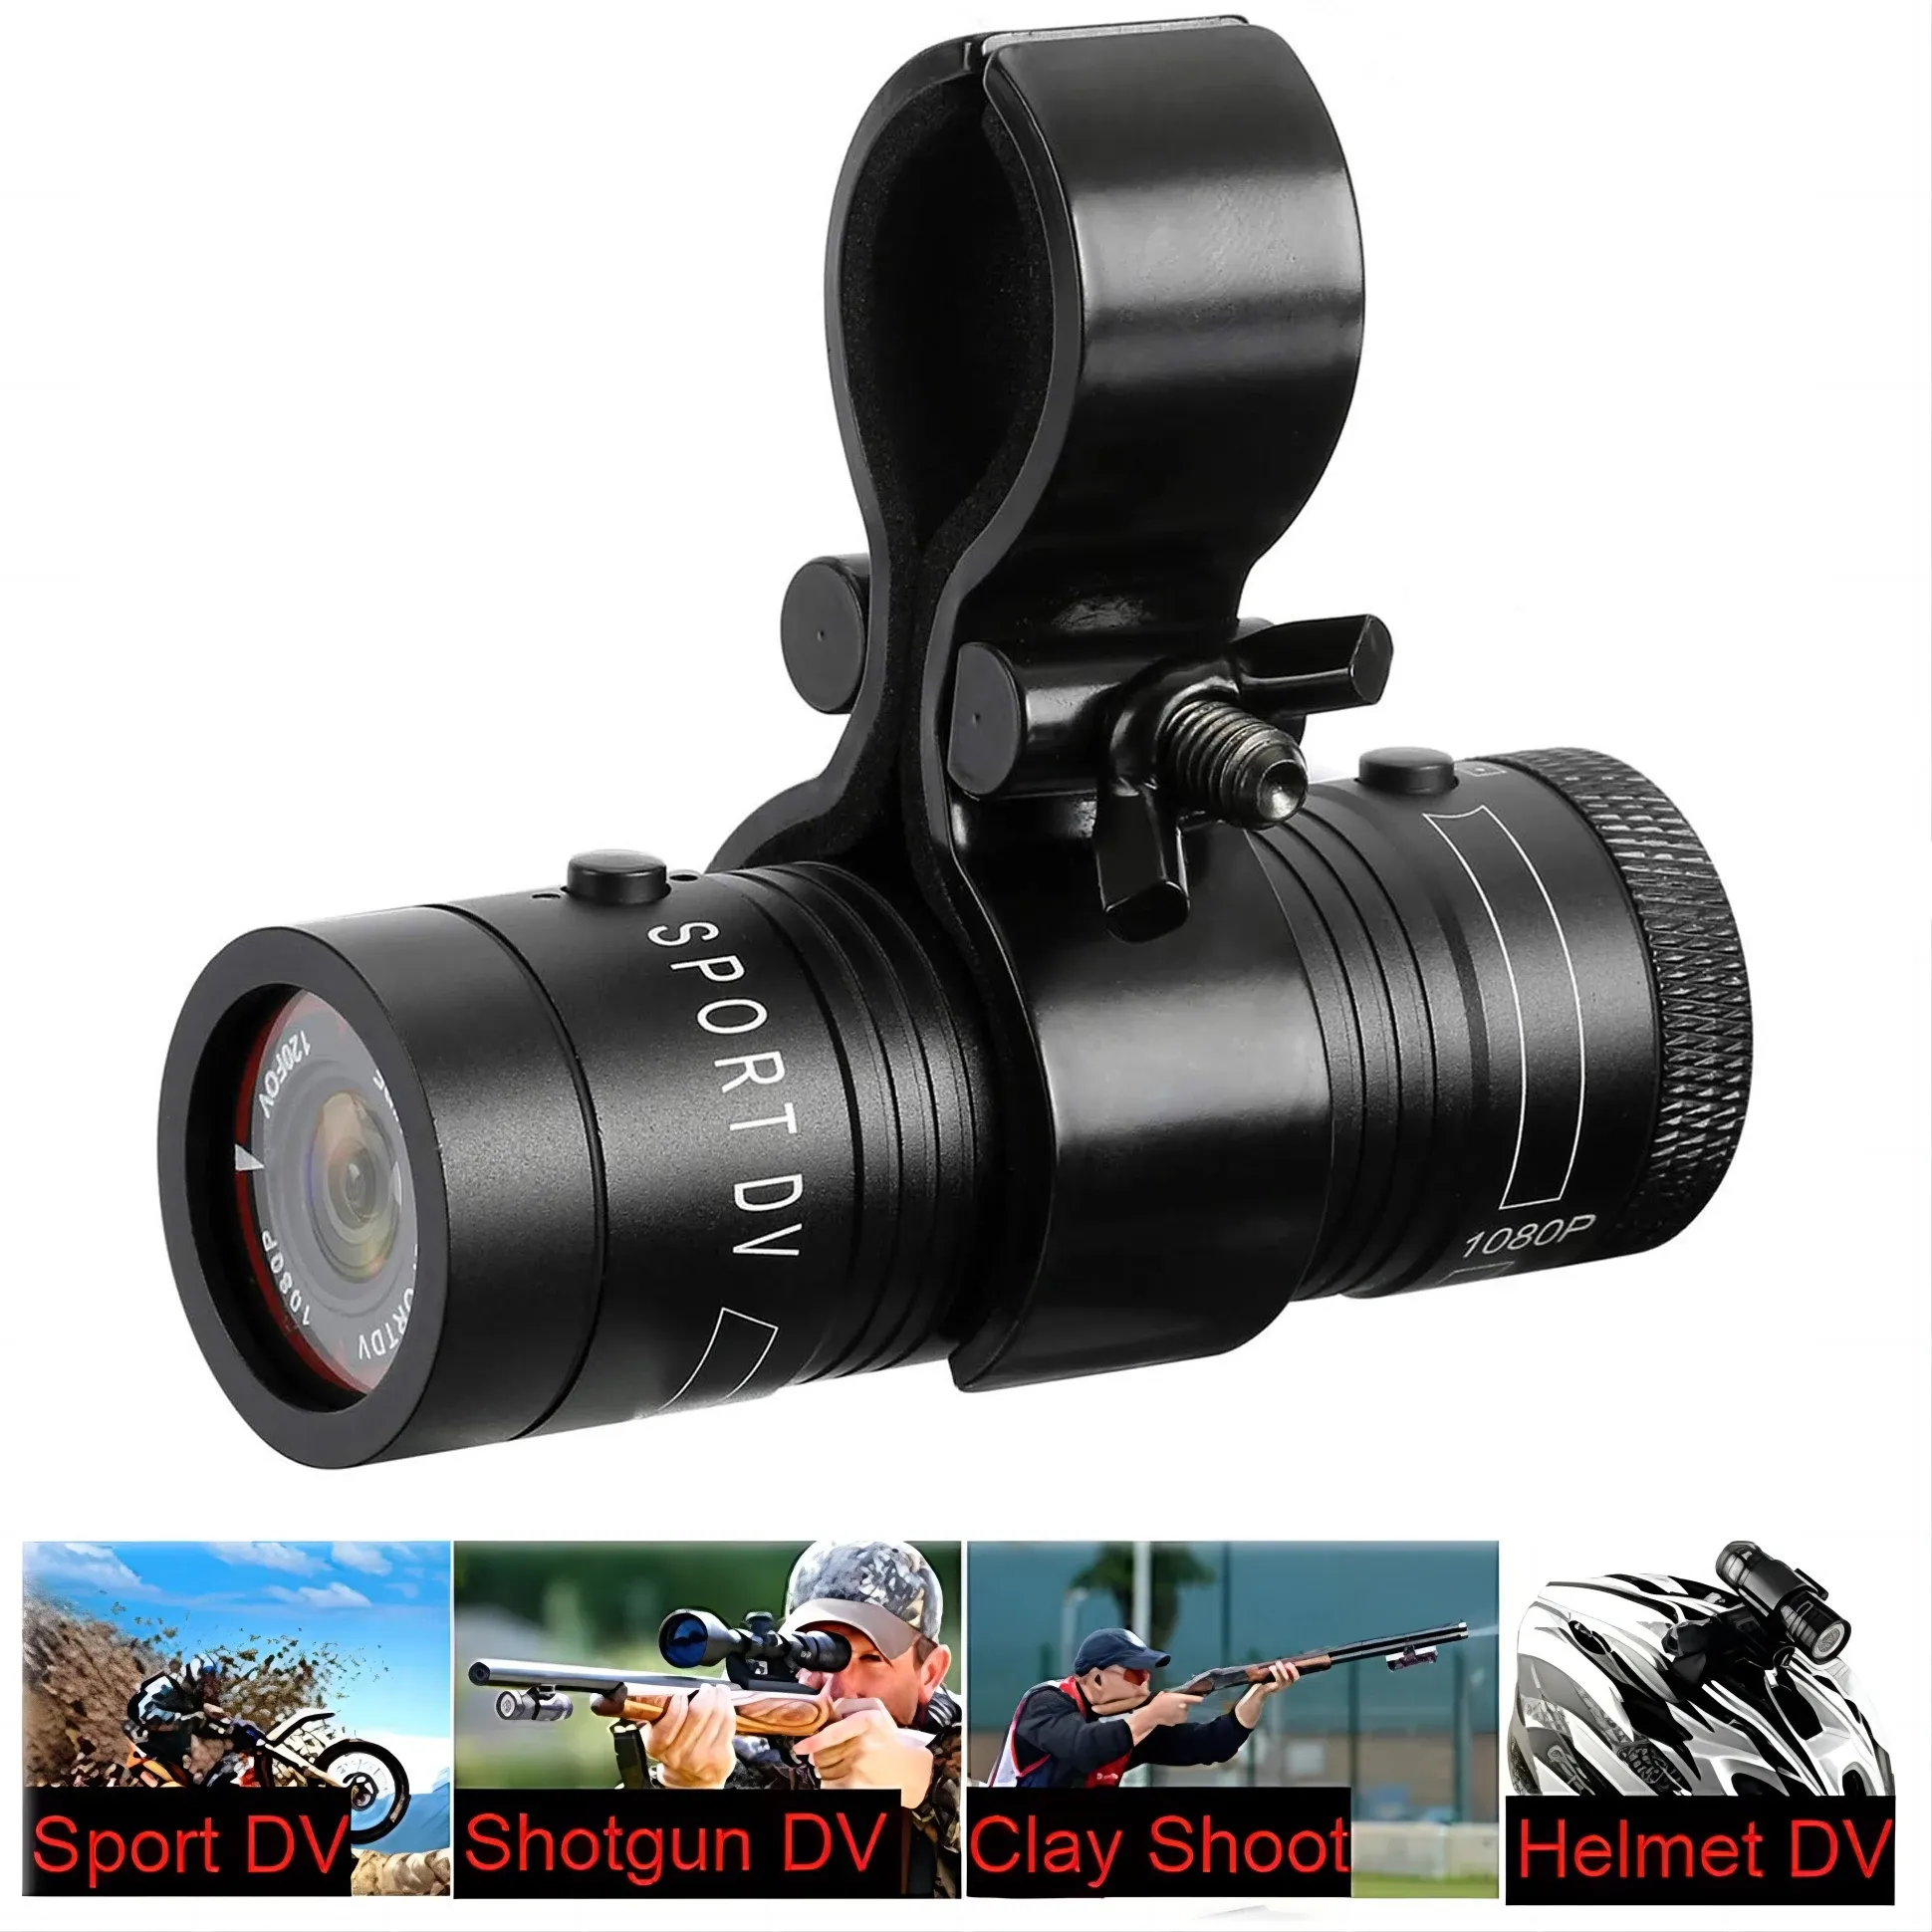 Cameras 1080P Shotgun Camera Outdoor Waterproof Bike Motorcycle Helmet Camera Sports DV Video Recorder Action Cam with Gun Mount